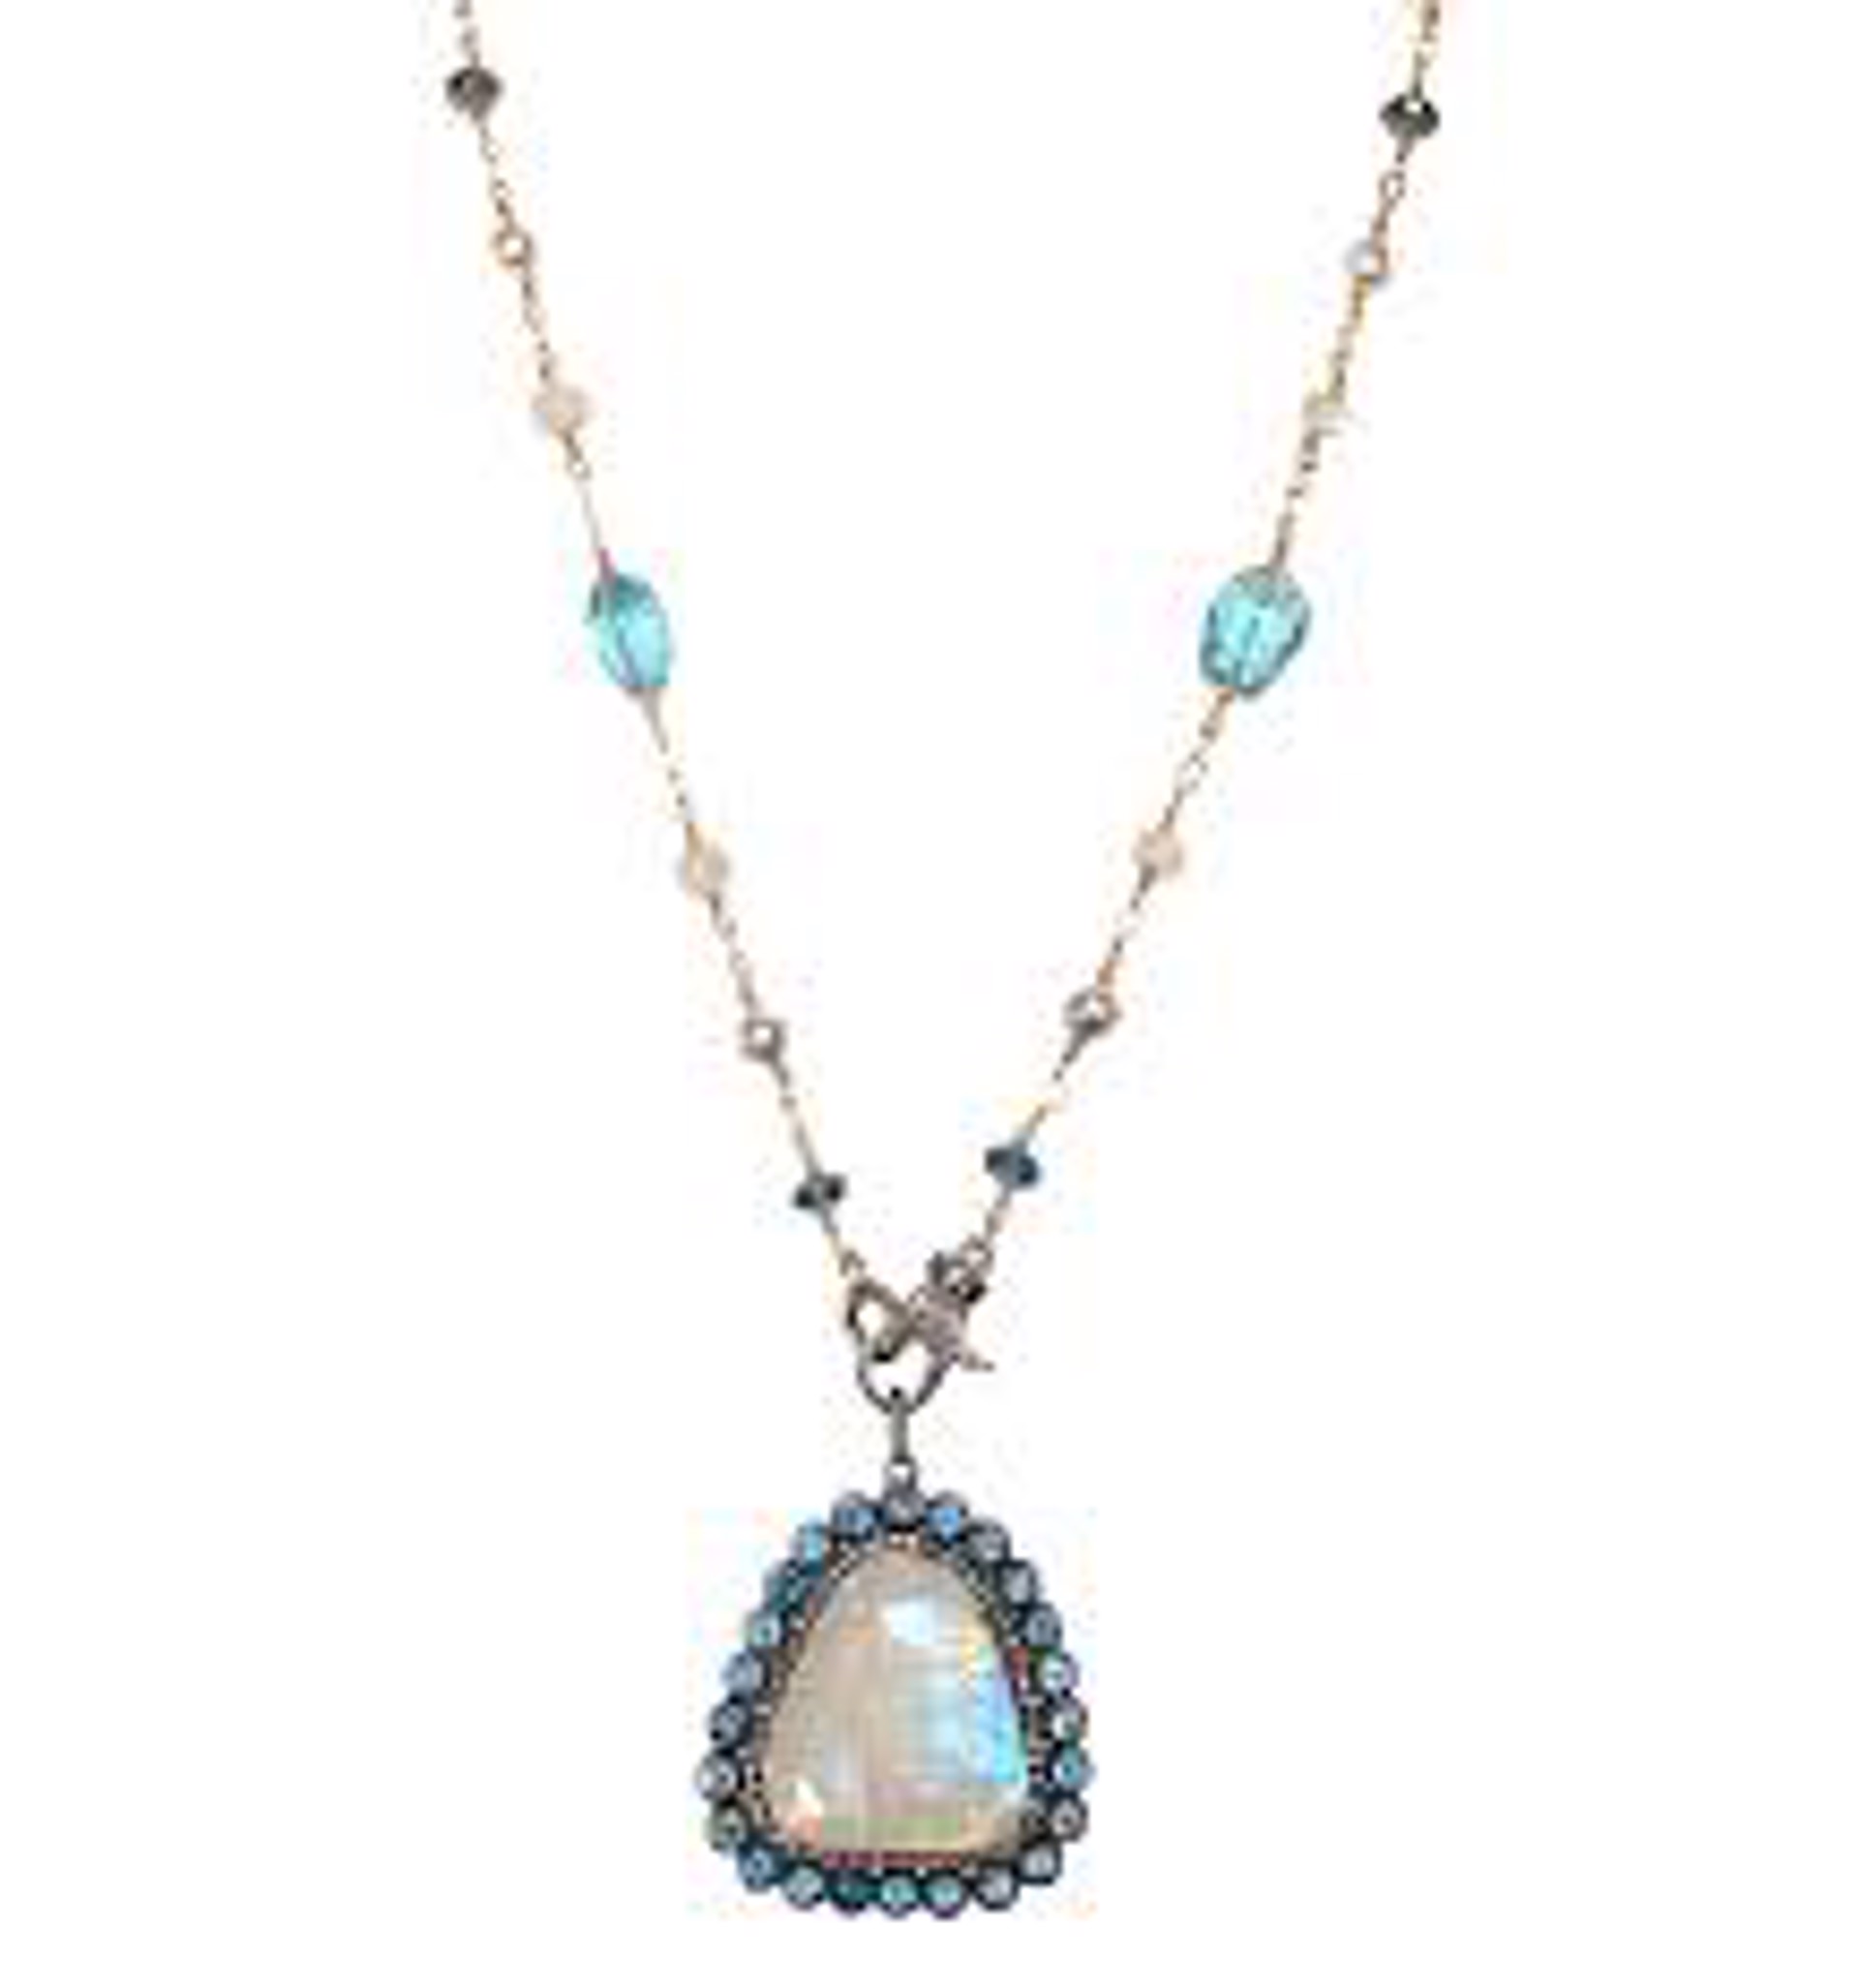 Rainbow Moonstone Pendant necklace with blue topaz by Melinda Lawton Jewelry